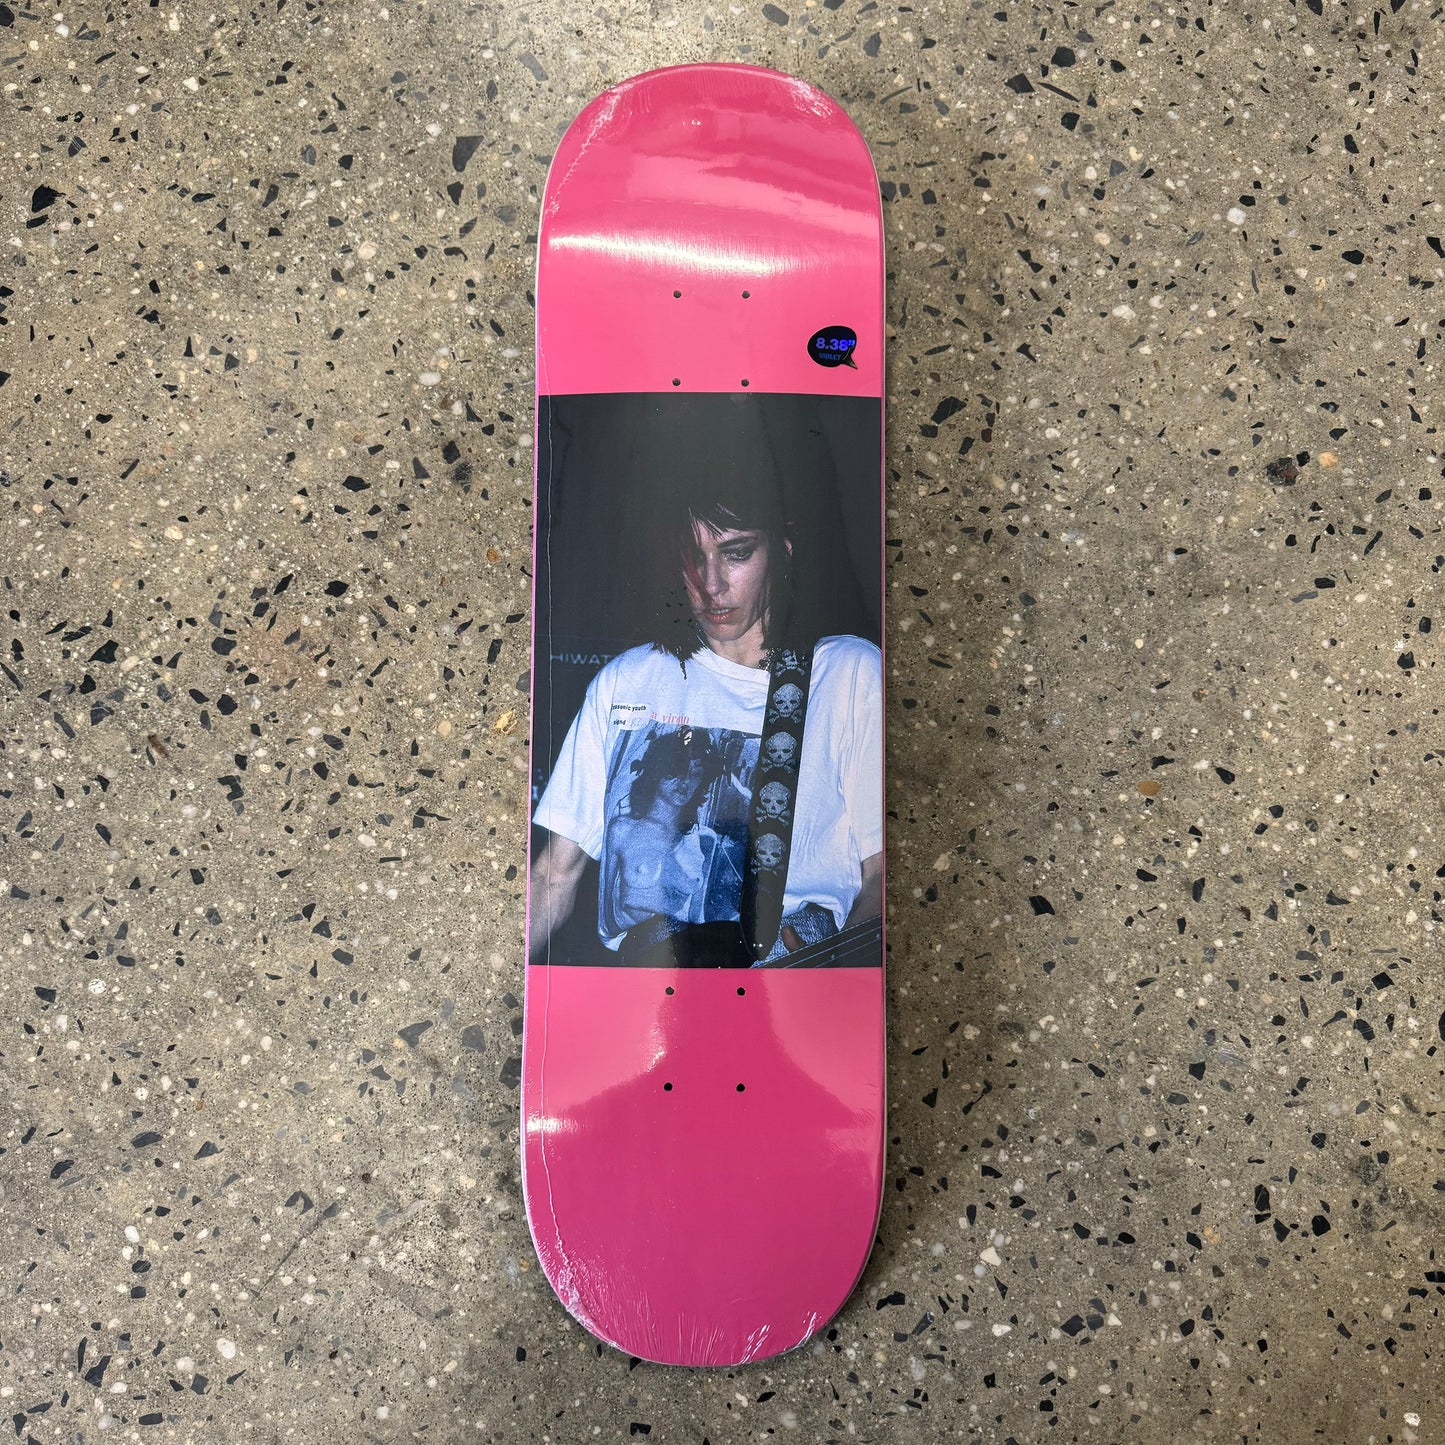 girl playing guitar on pink skate deck